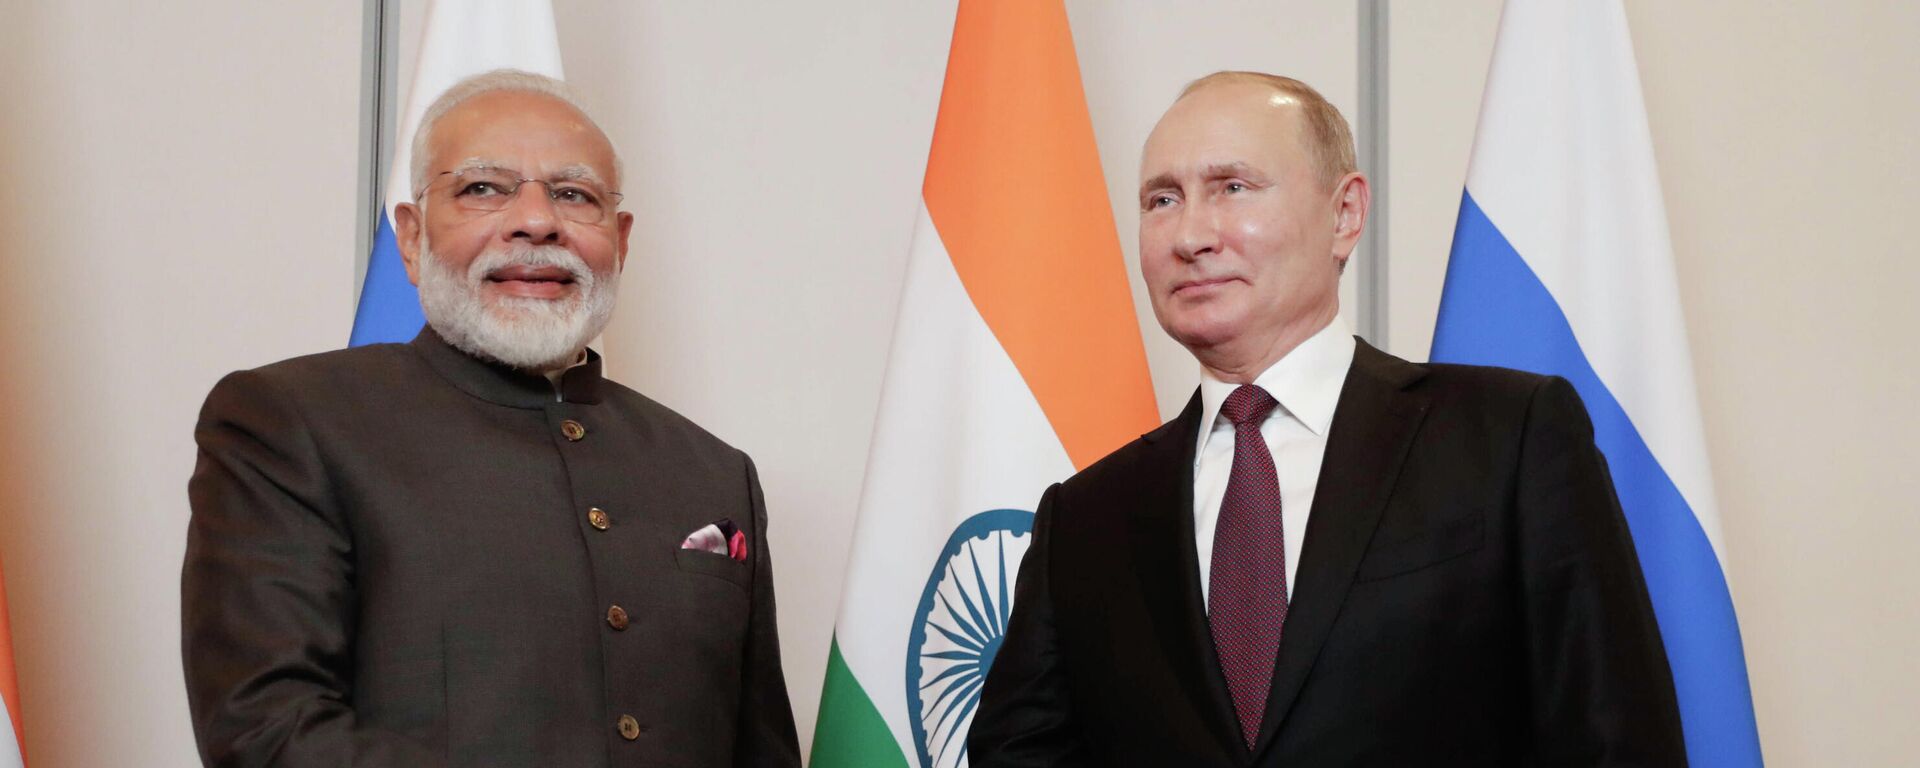 India's Prime Minister Narendra Modi, left, shakes hands with Russia's President Vladimir Putin (File) - Sputnik International, 1920, 05.09.2022